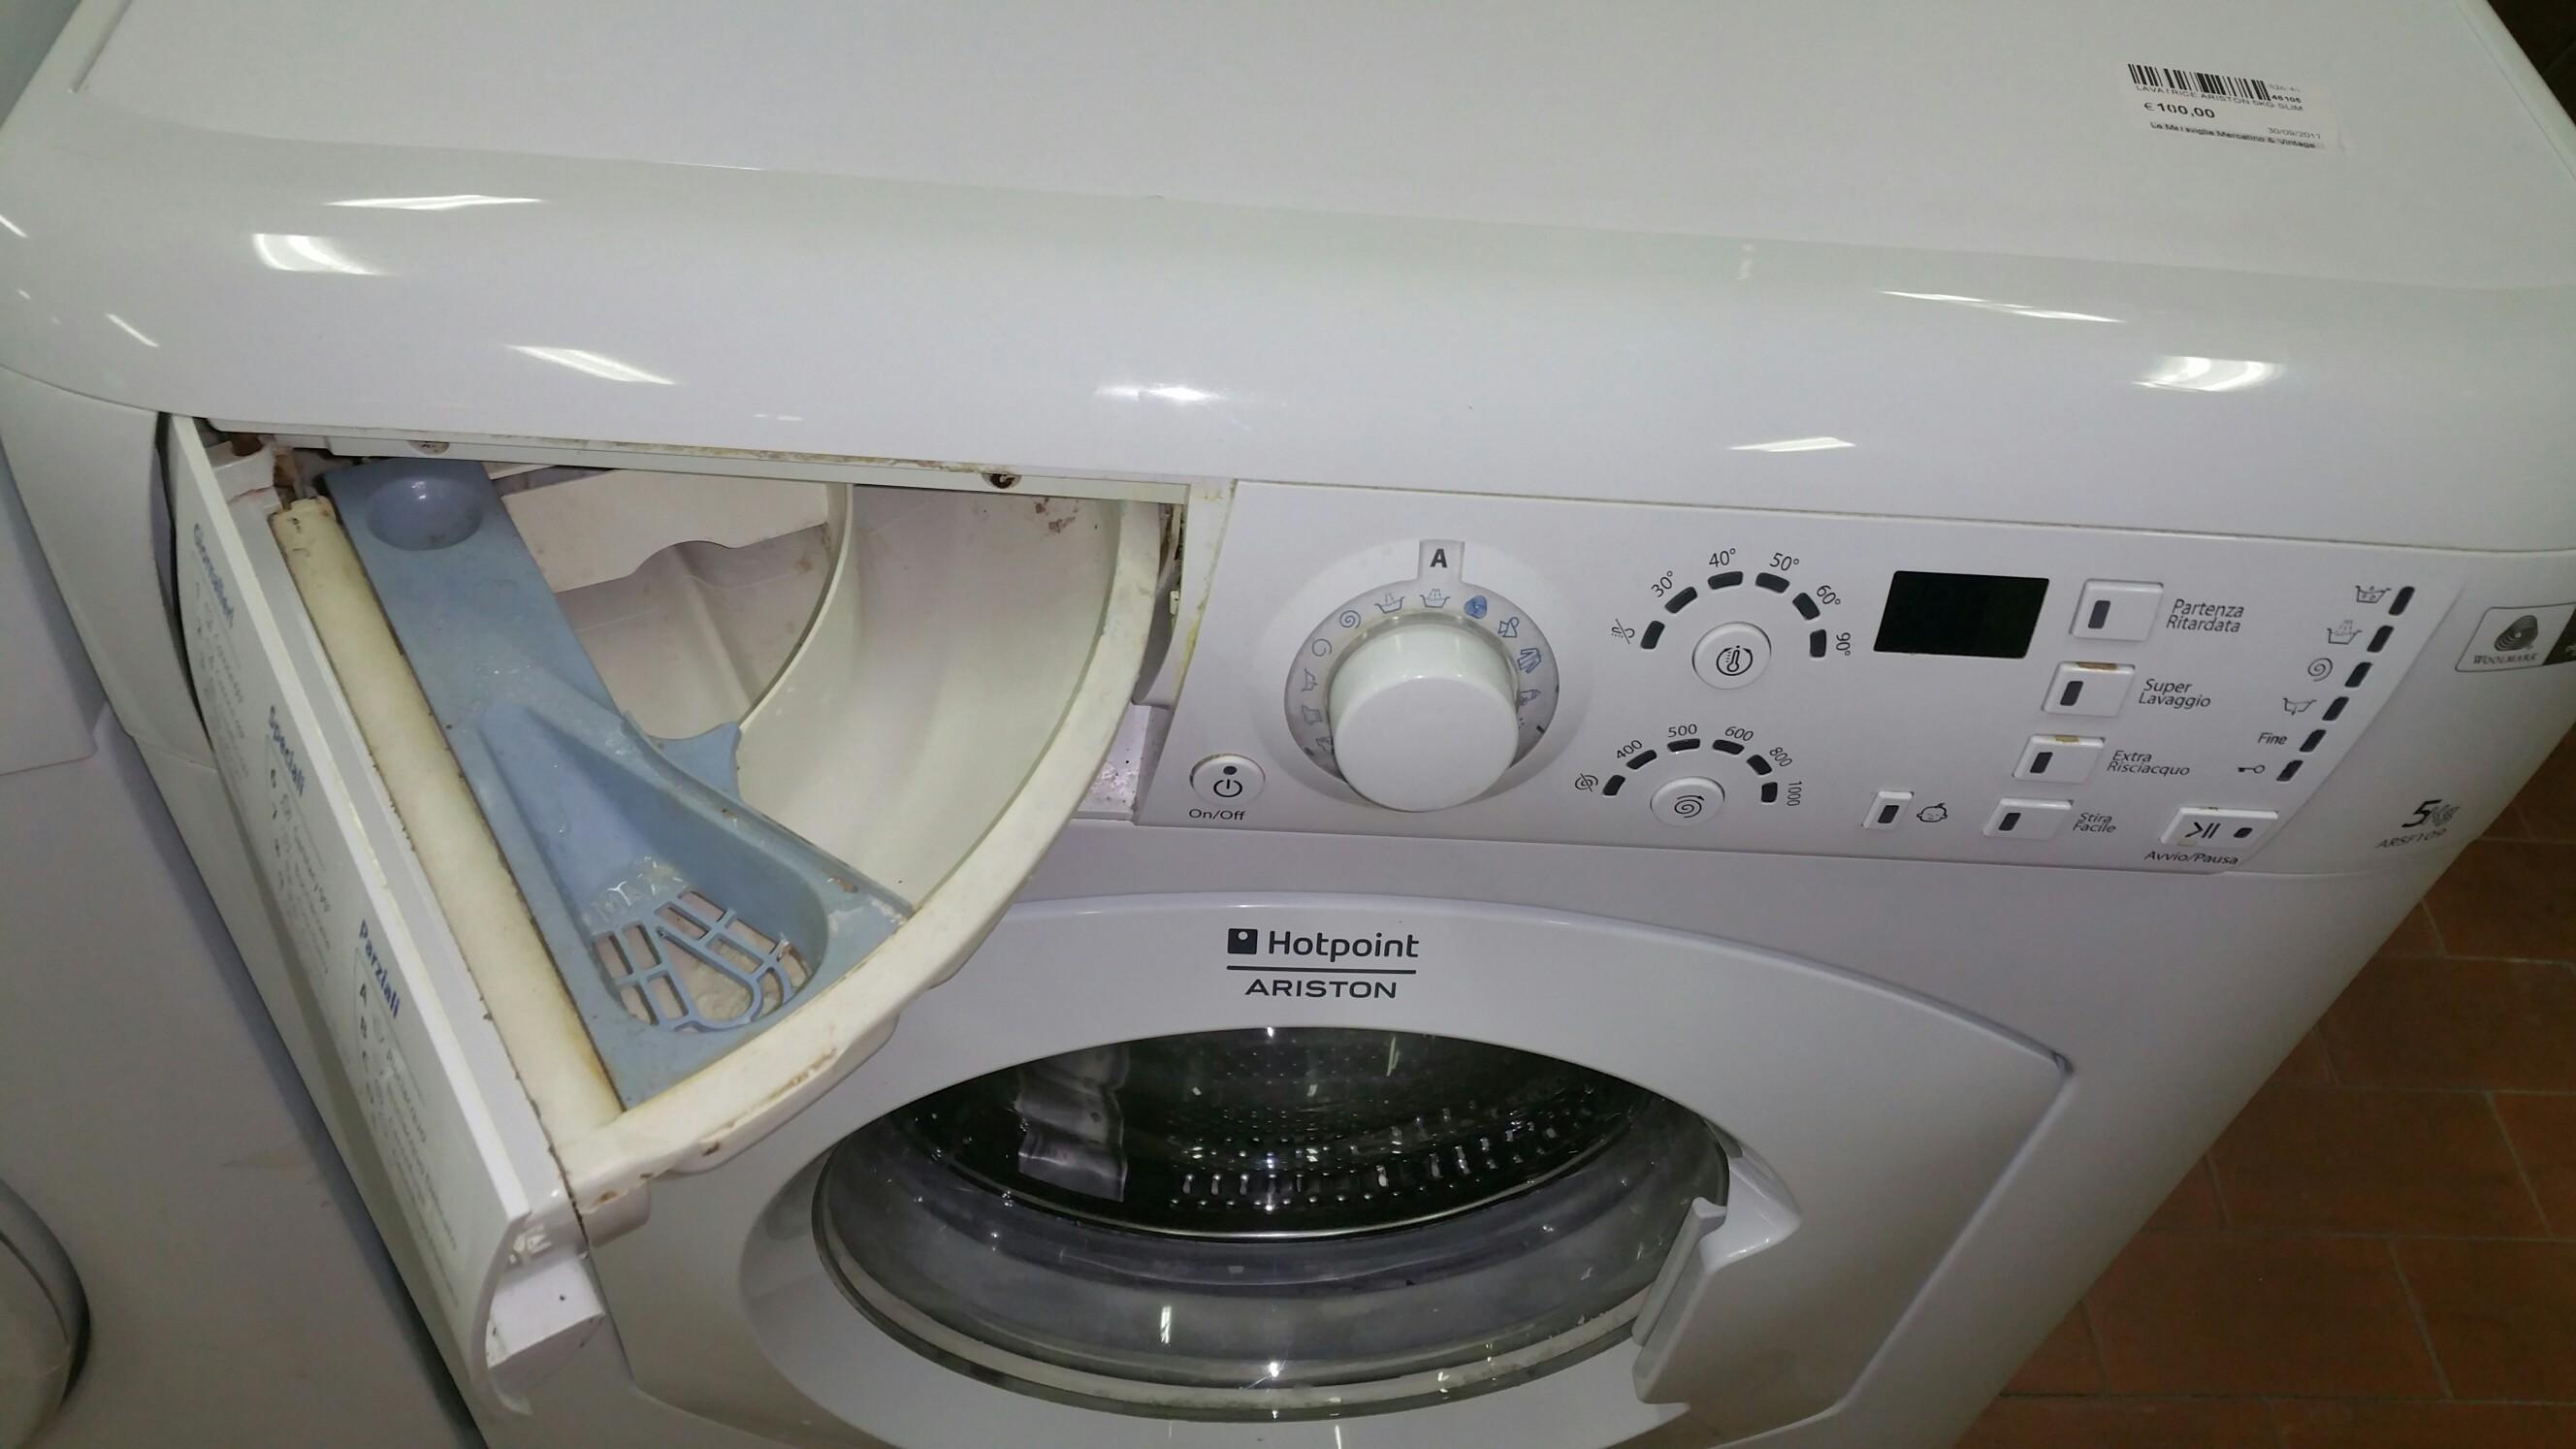 converse bianche lavatrice hotpoint